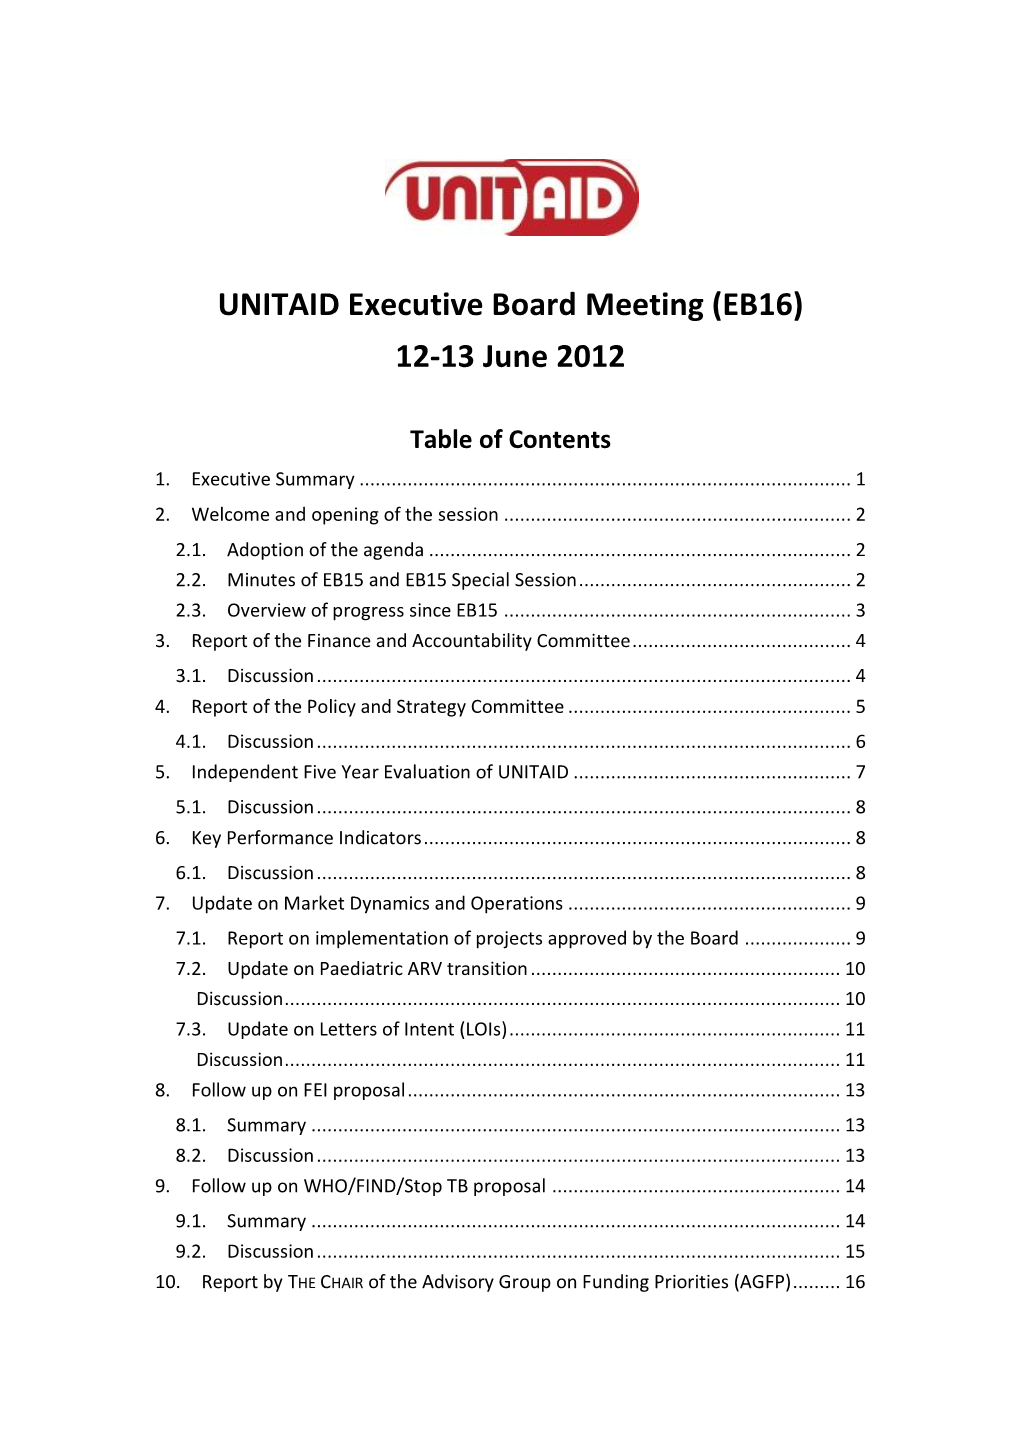 UNITAID Executive Board Meeting (EB16) 12-13 June 2012